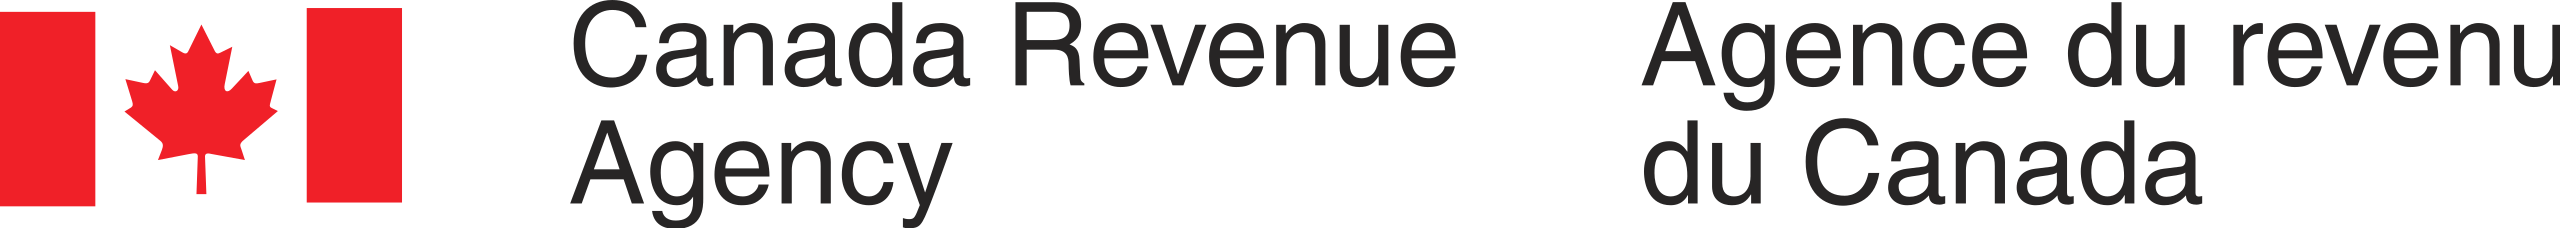 canada_revenue_agency_(logo).png